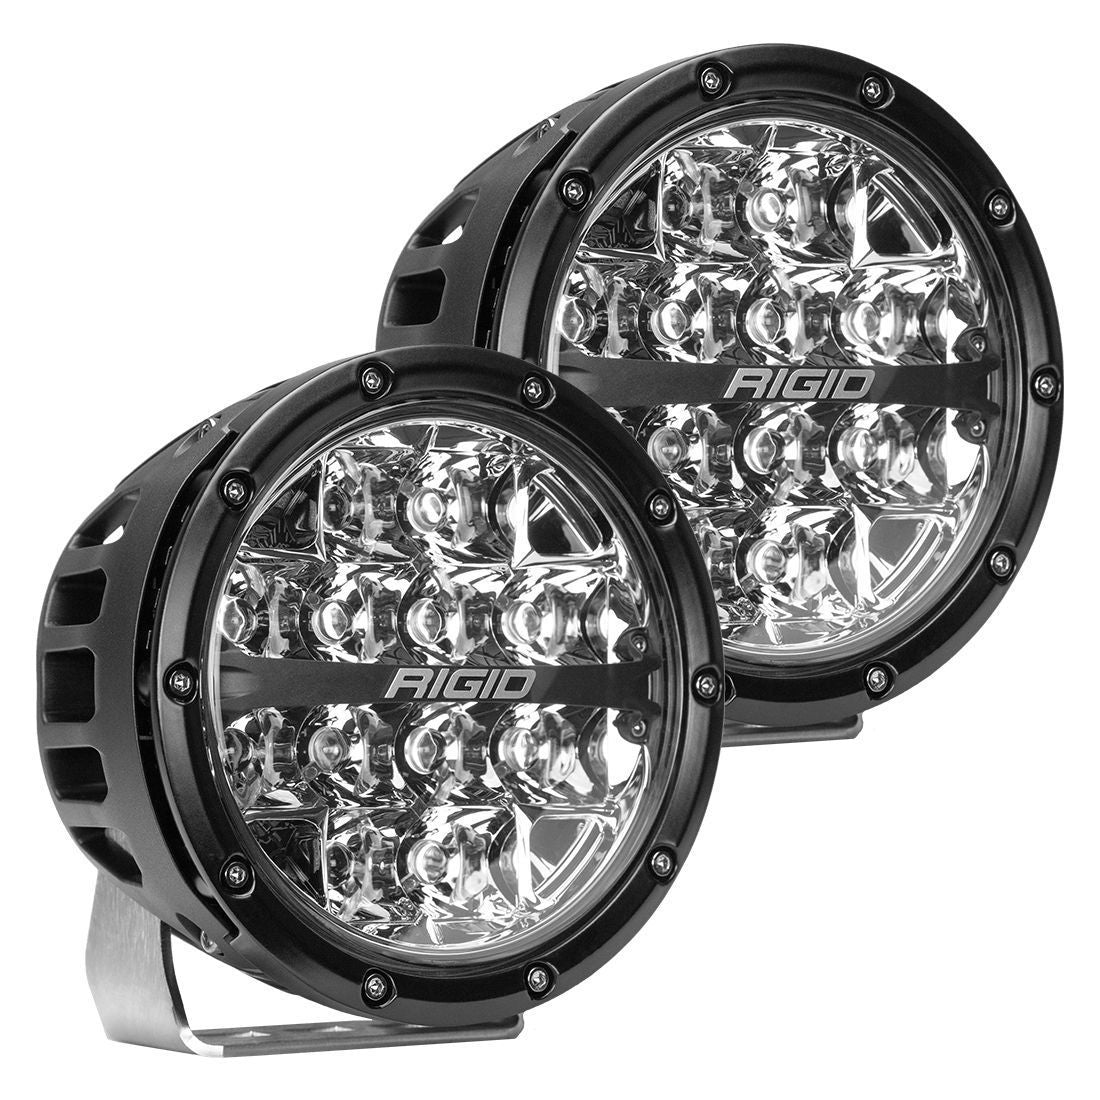 360 Series 6" LED OE Off-Road Fog Light Pair Lighting Rigid Industries White Spot display